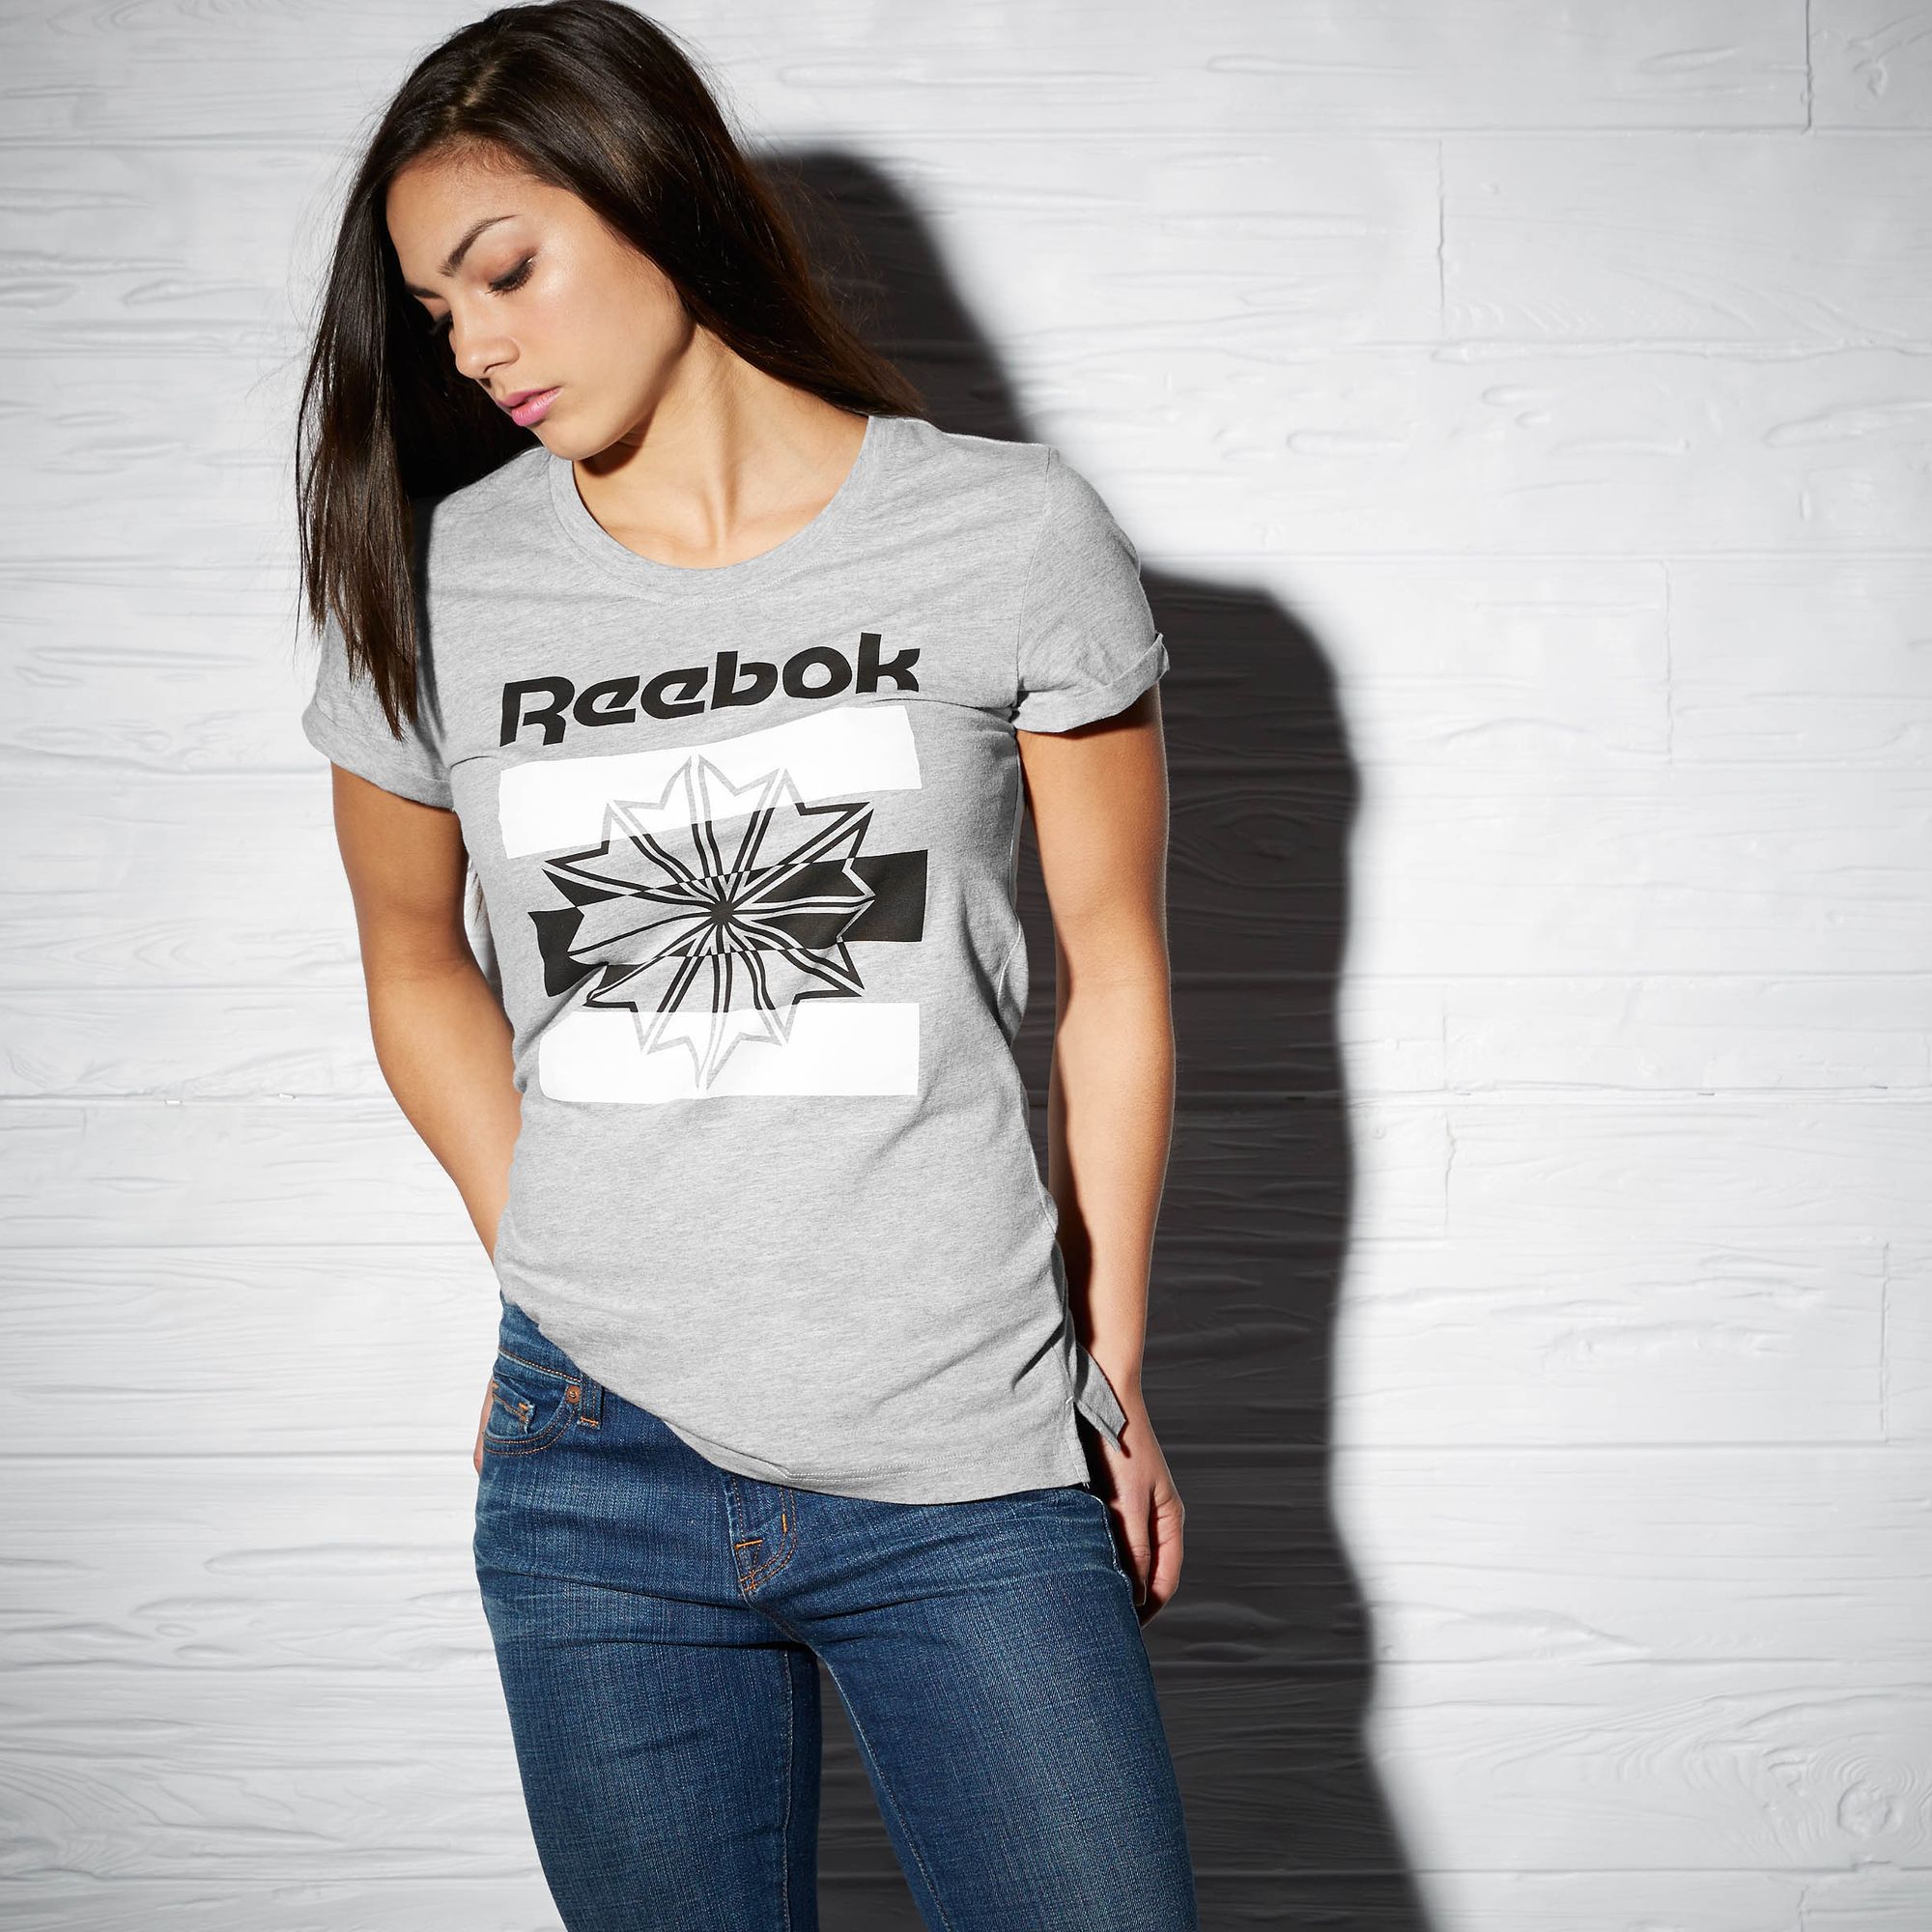 Reebok Classic Camiseta Mujer Starcrest (gris)